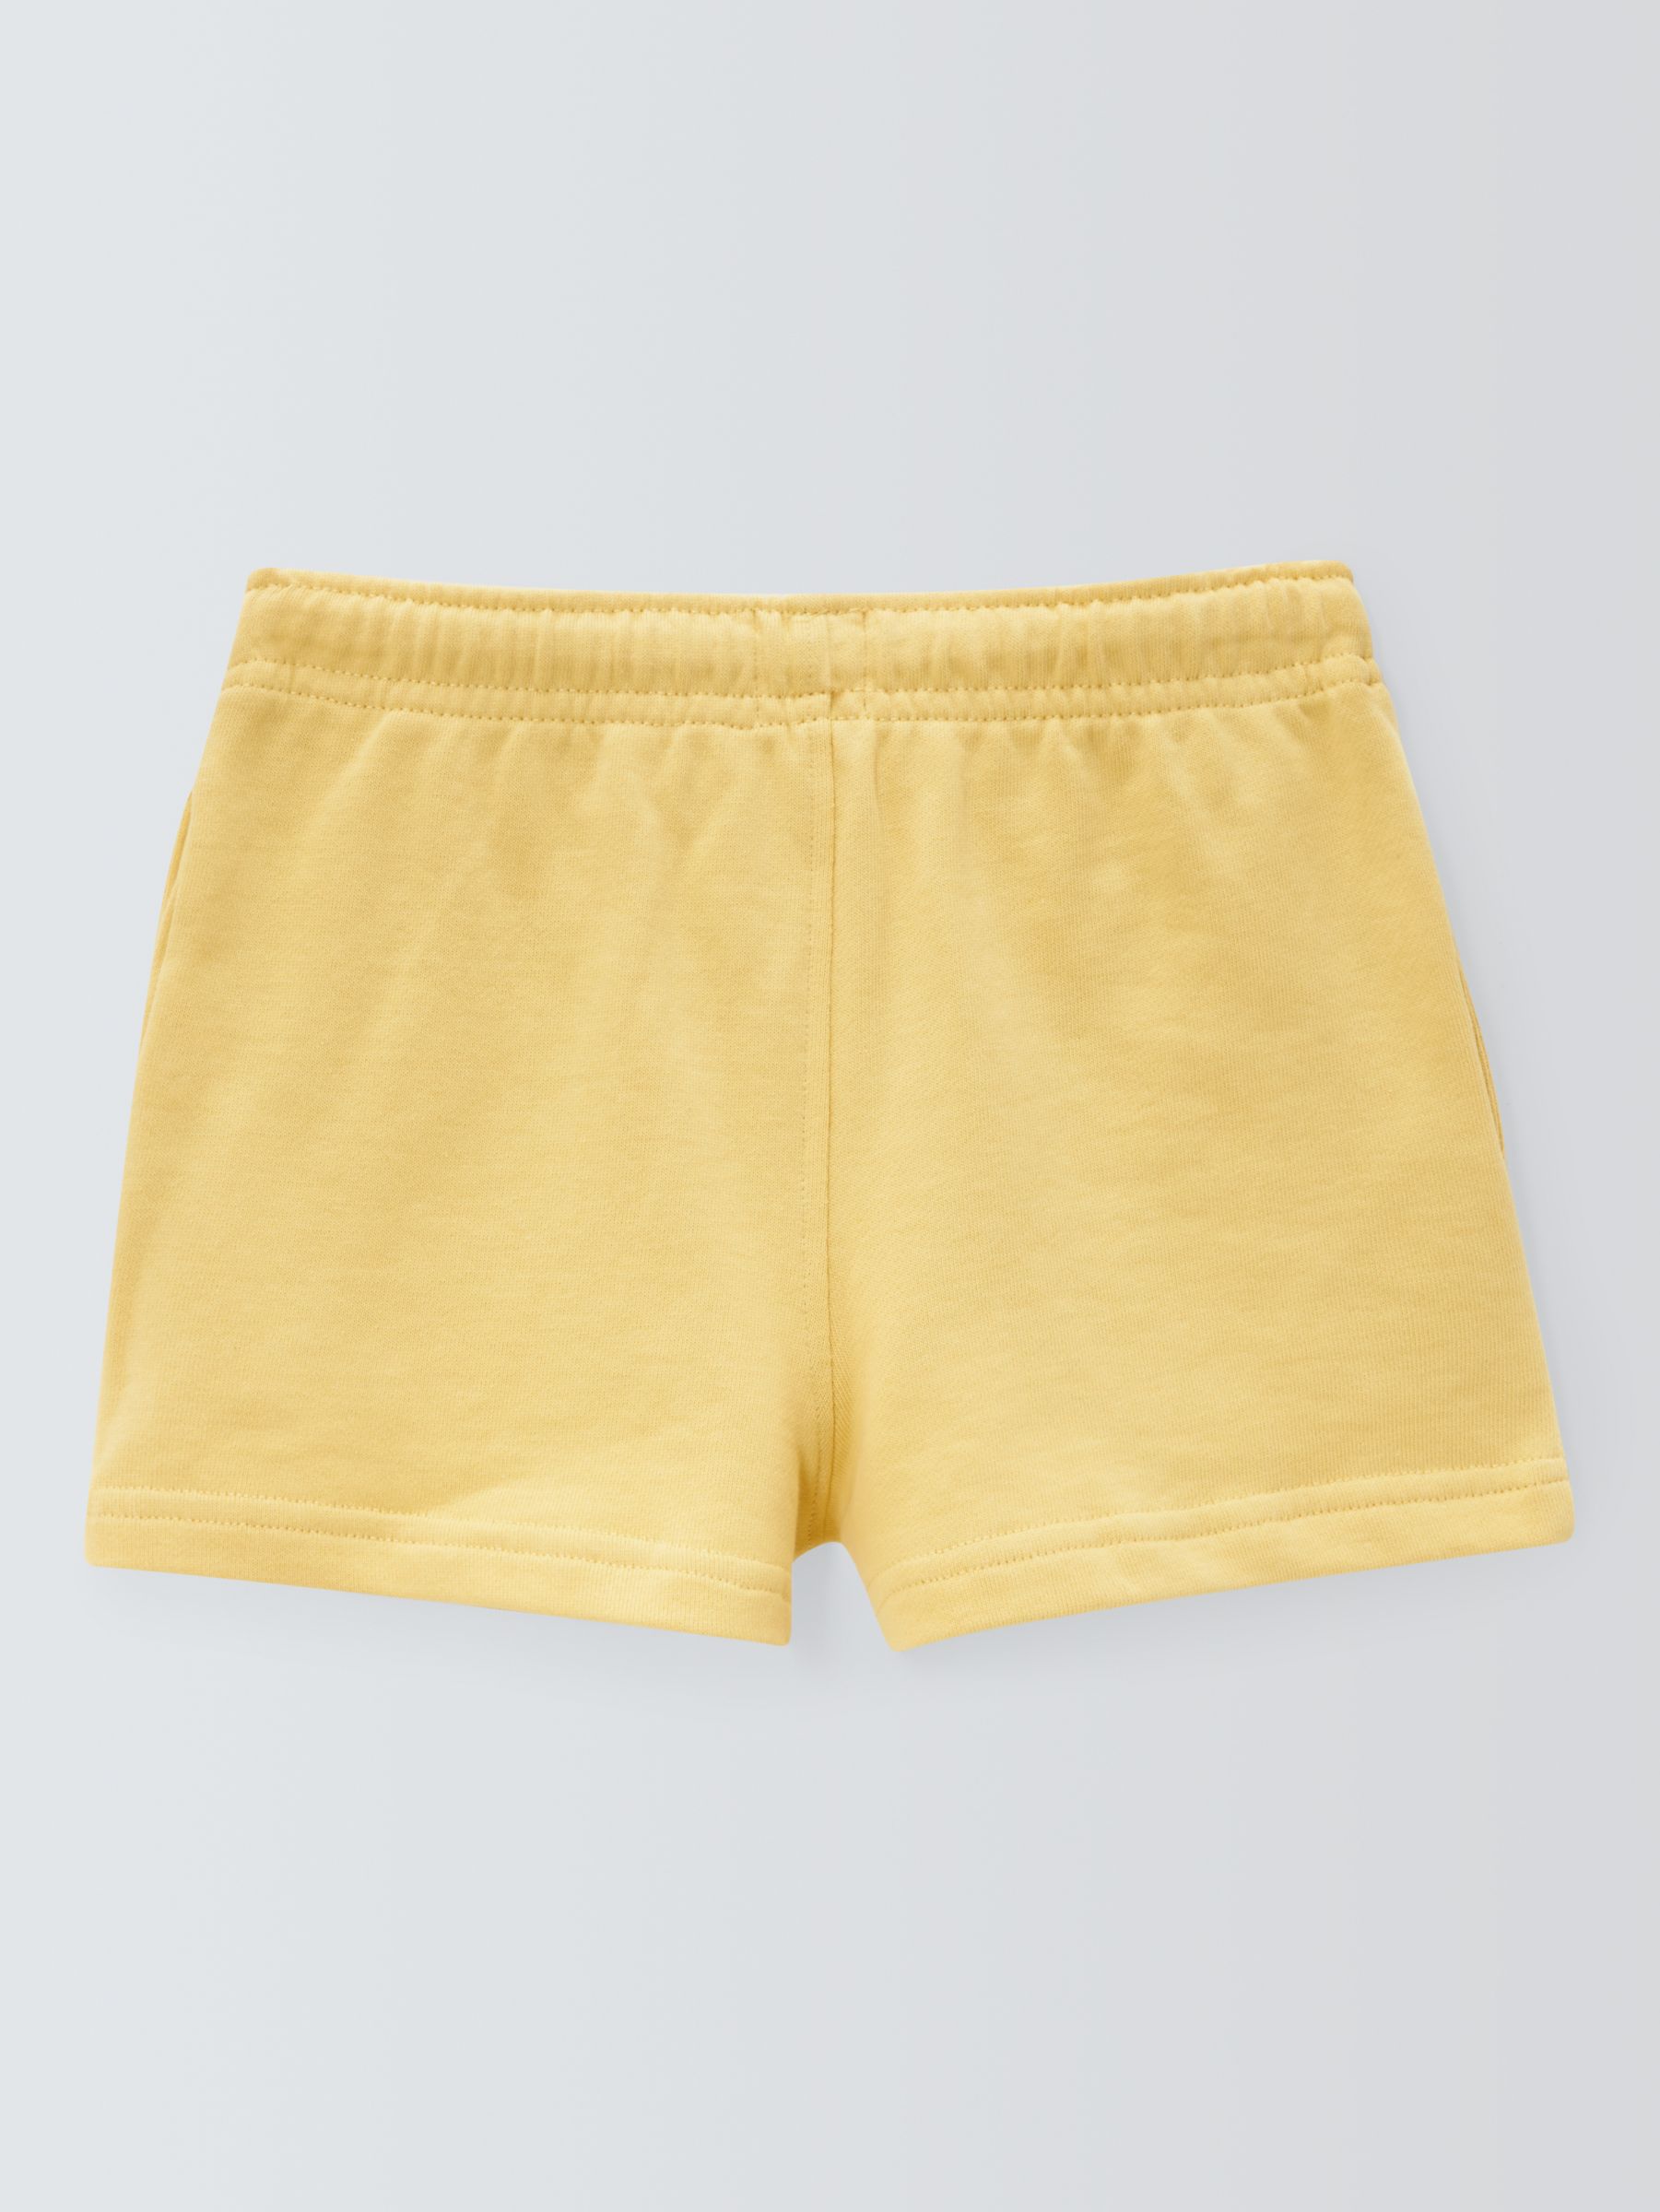 John Lewis ANYDAY Kids' Cotton Shorts, Yellow, 12 years